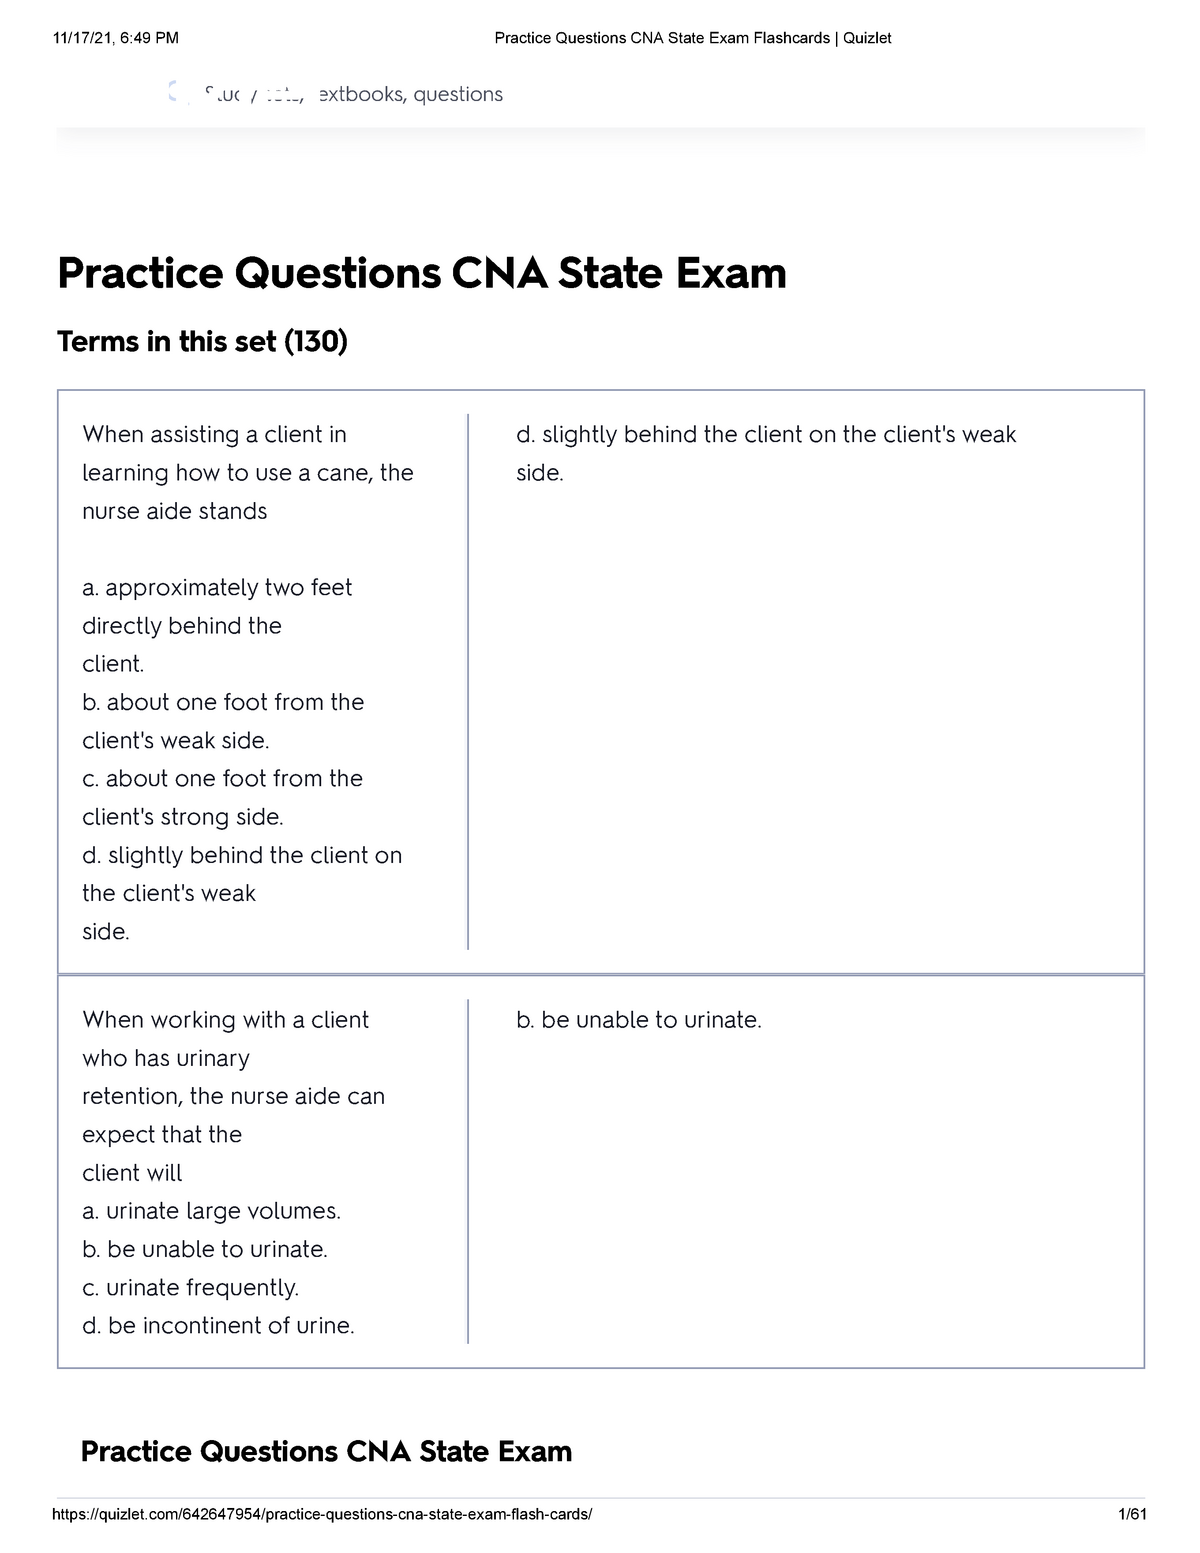 prometric cna test questions